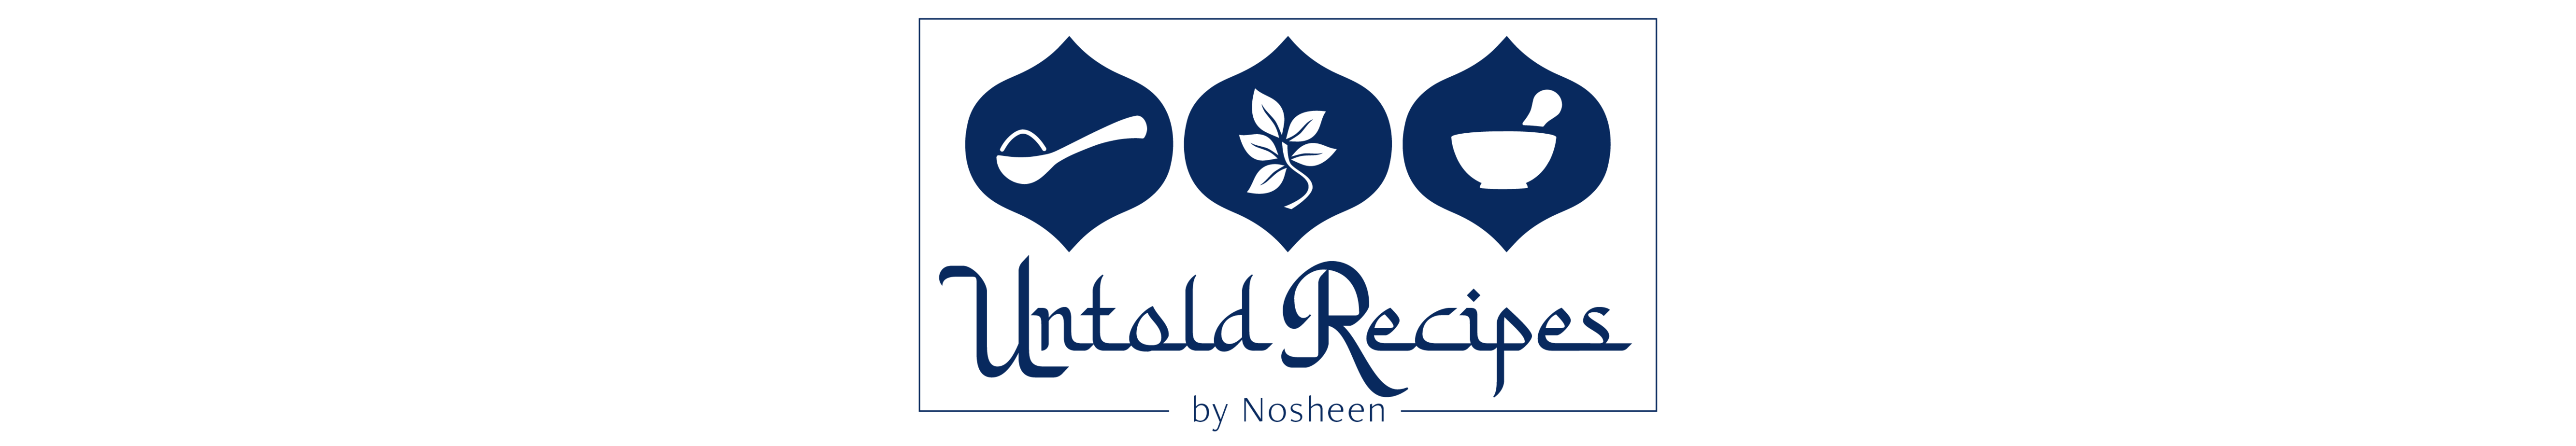 Untold Recipes By Nosheen